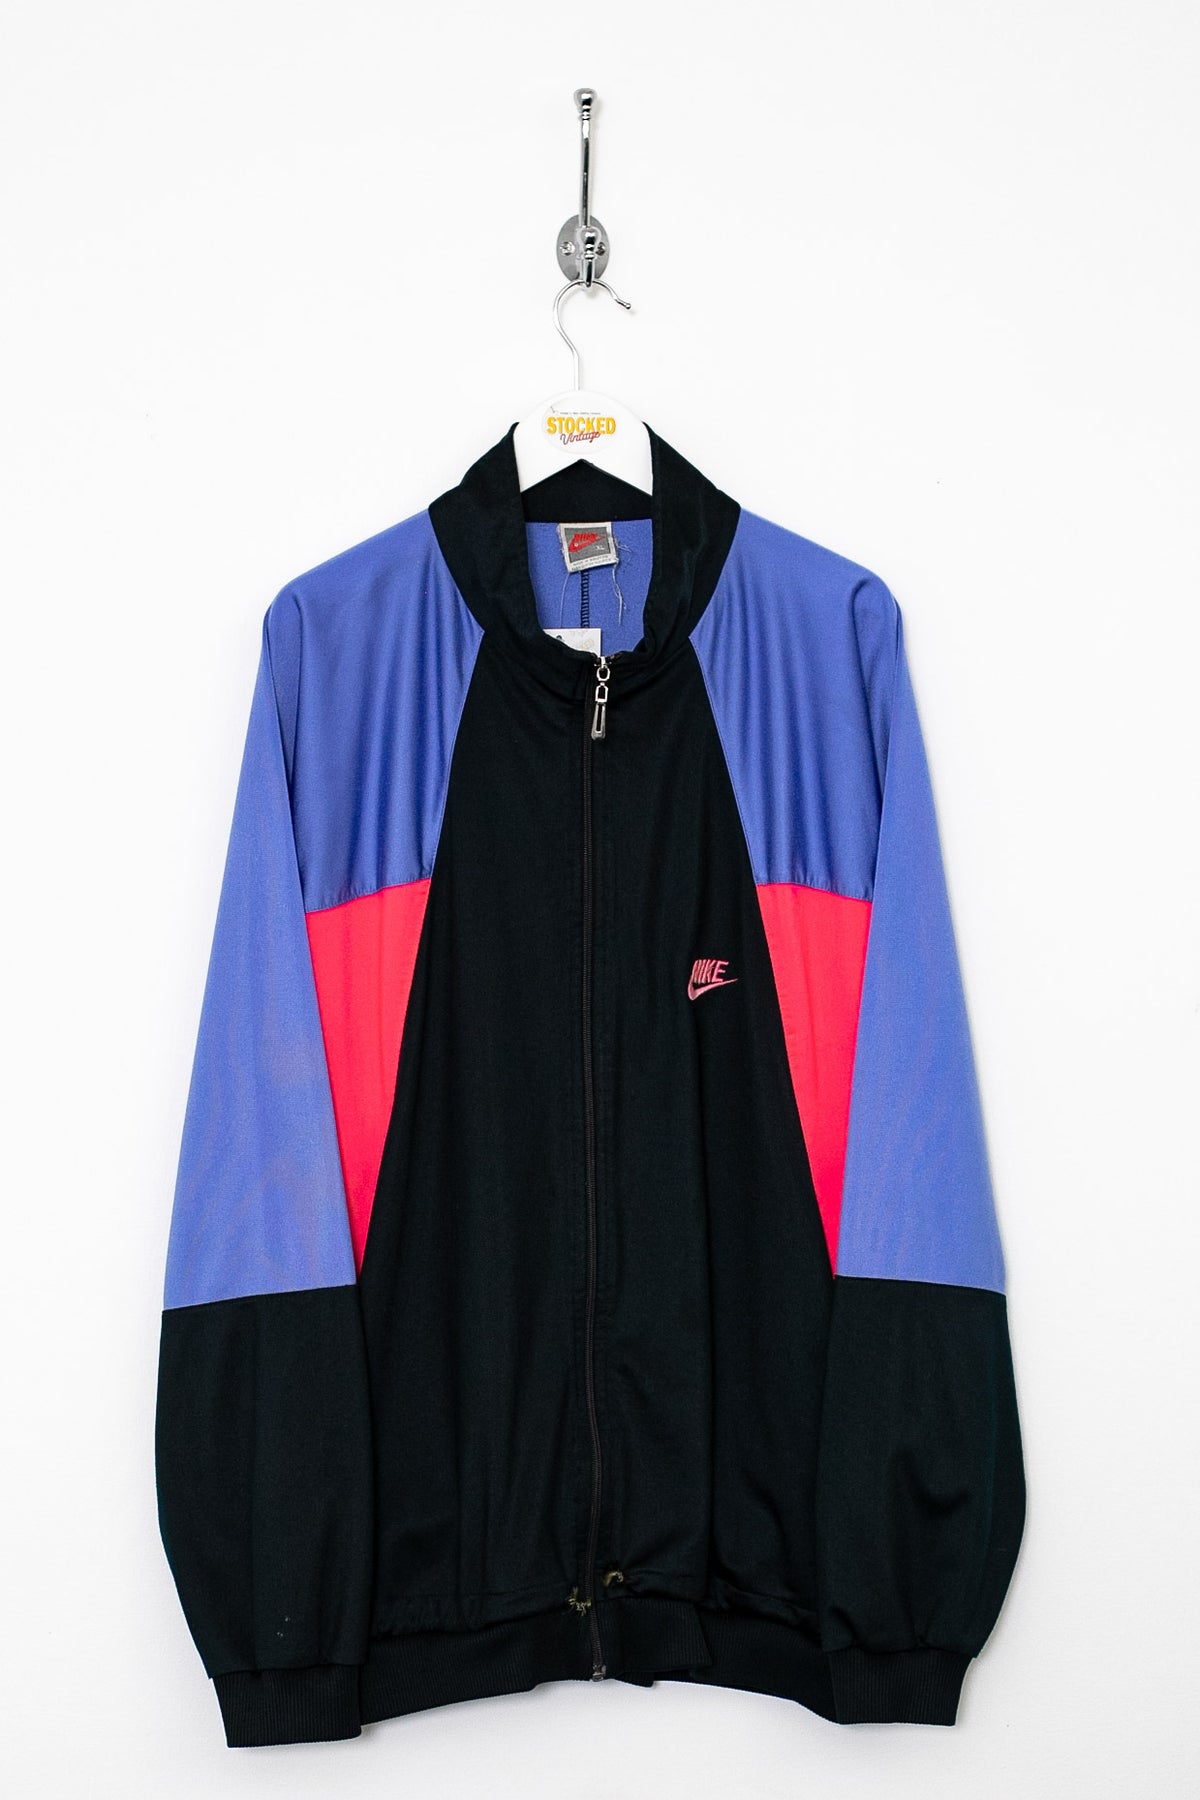 90s Nike Jacket (XL)